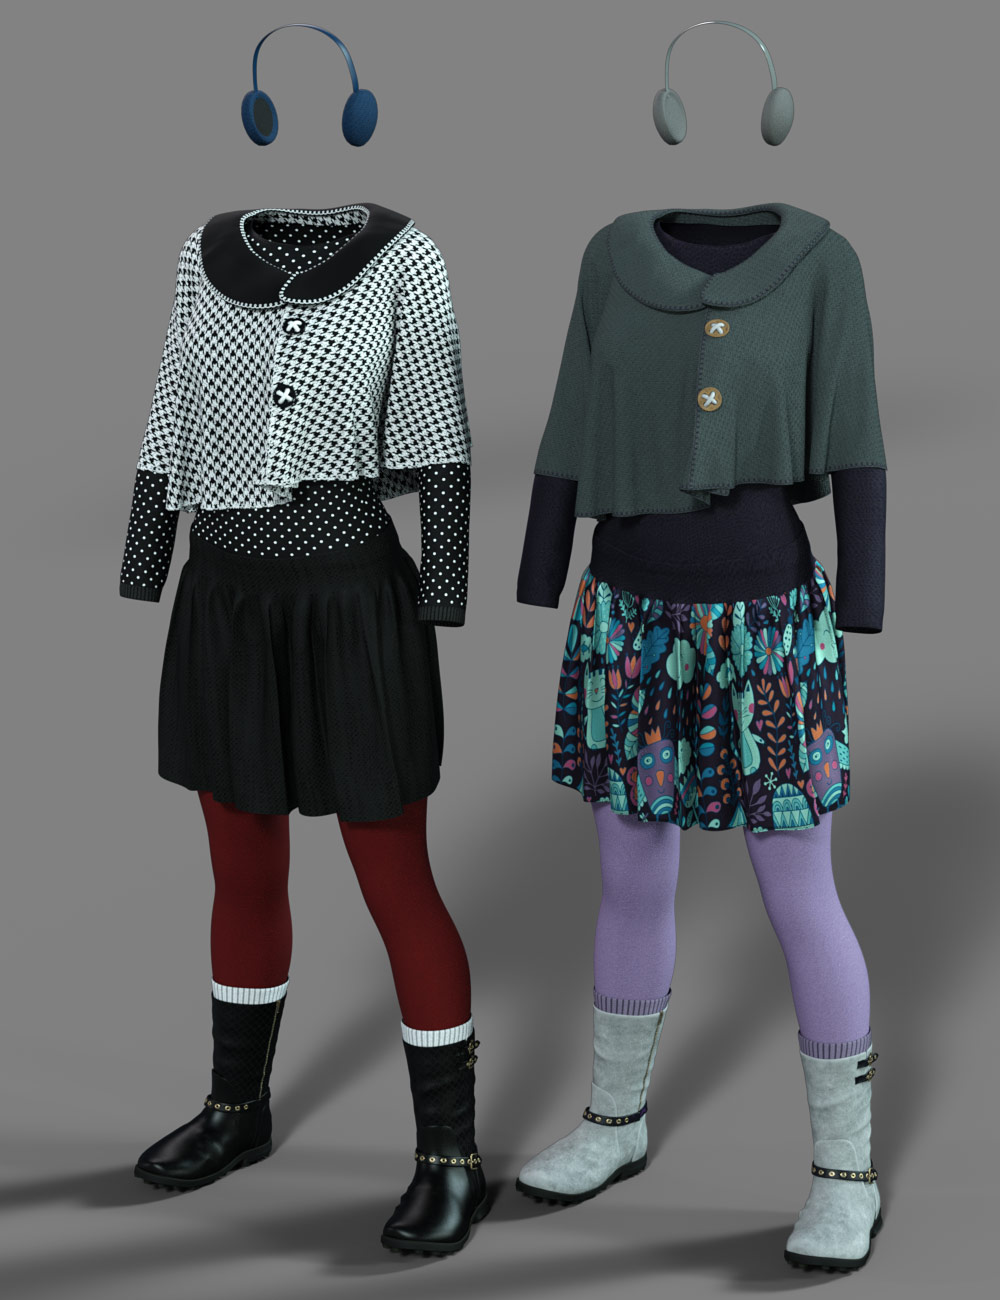 dForce Wonderland Outfit Textures by: Moonscape GraphicsSade, 3D Models by Daz 3D